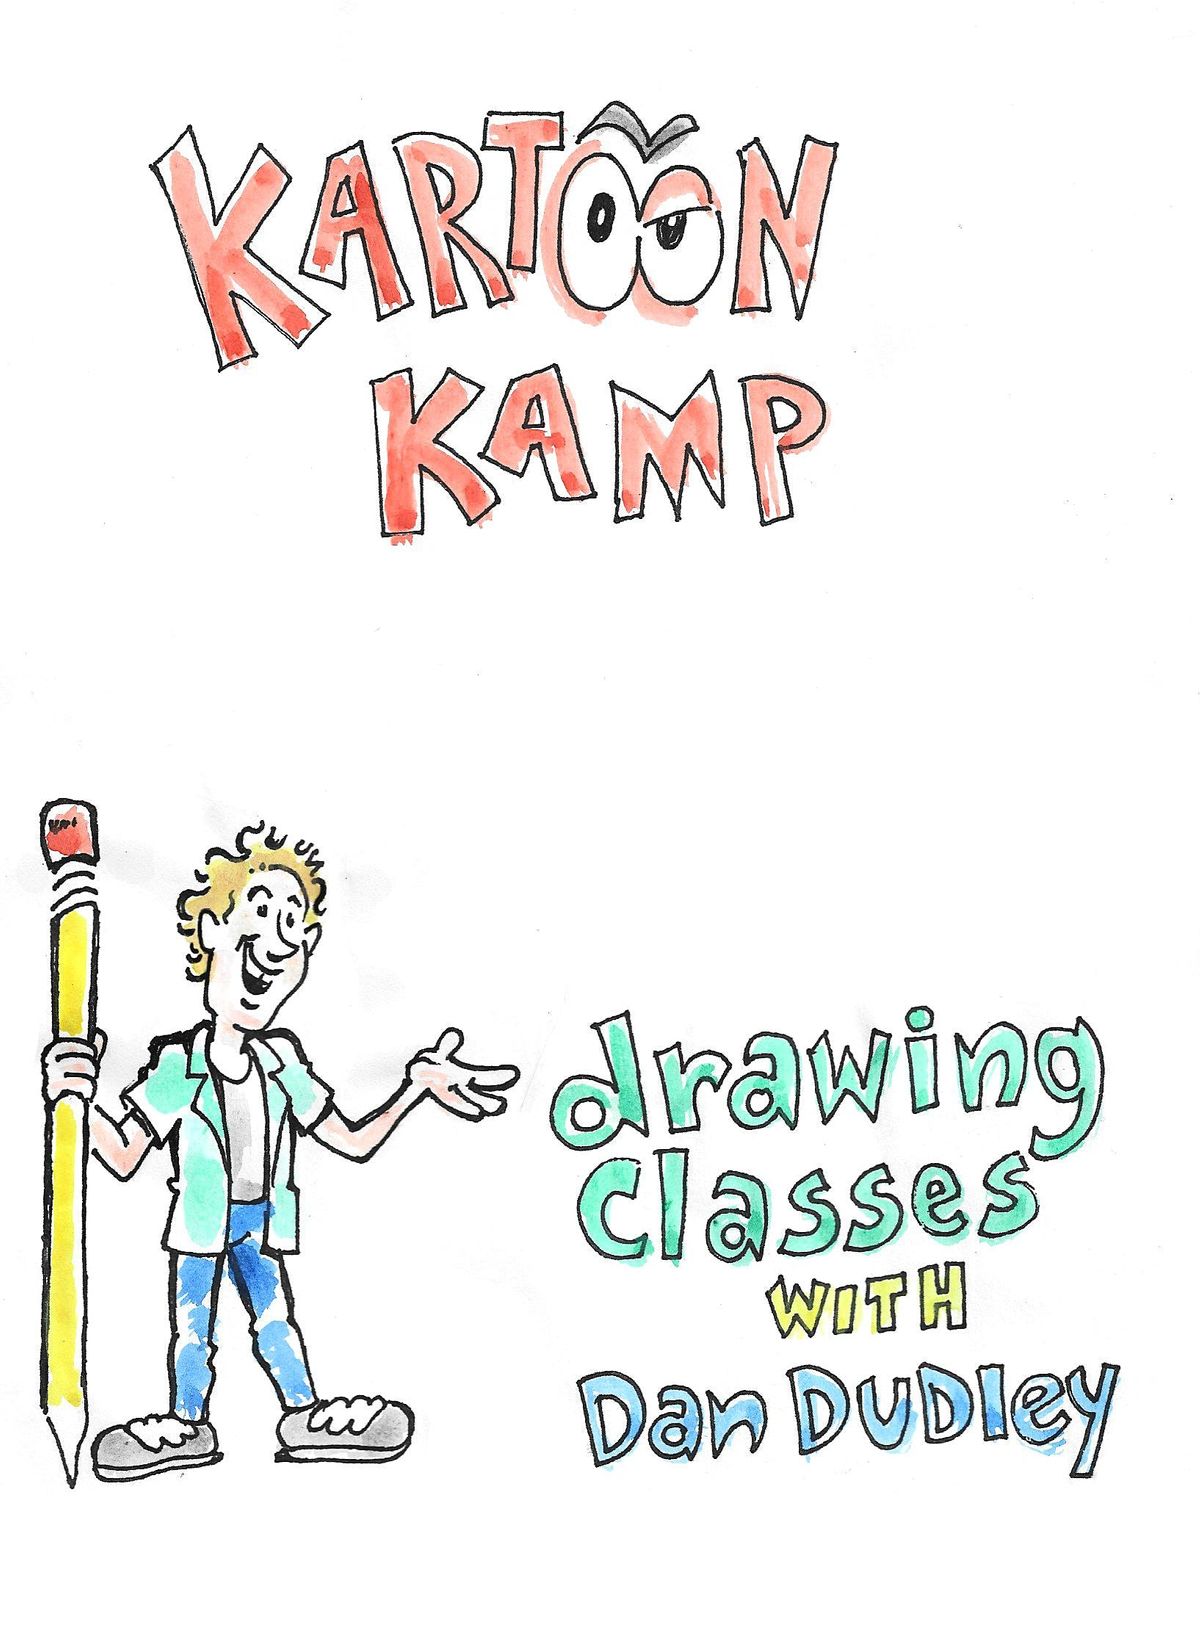 Kartoon Kamp with Dan Dudley!